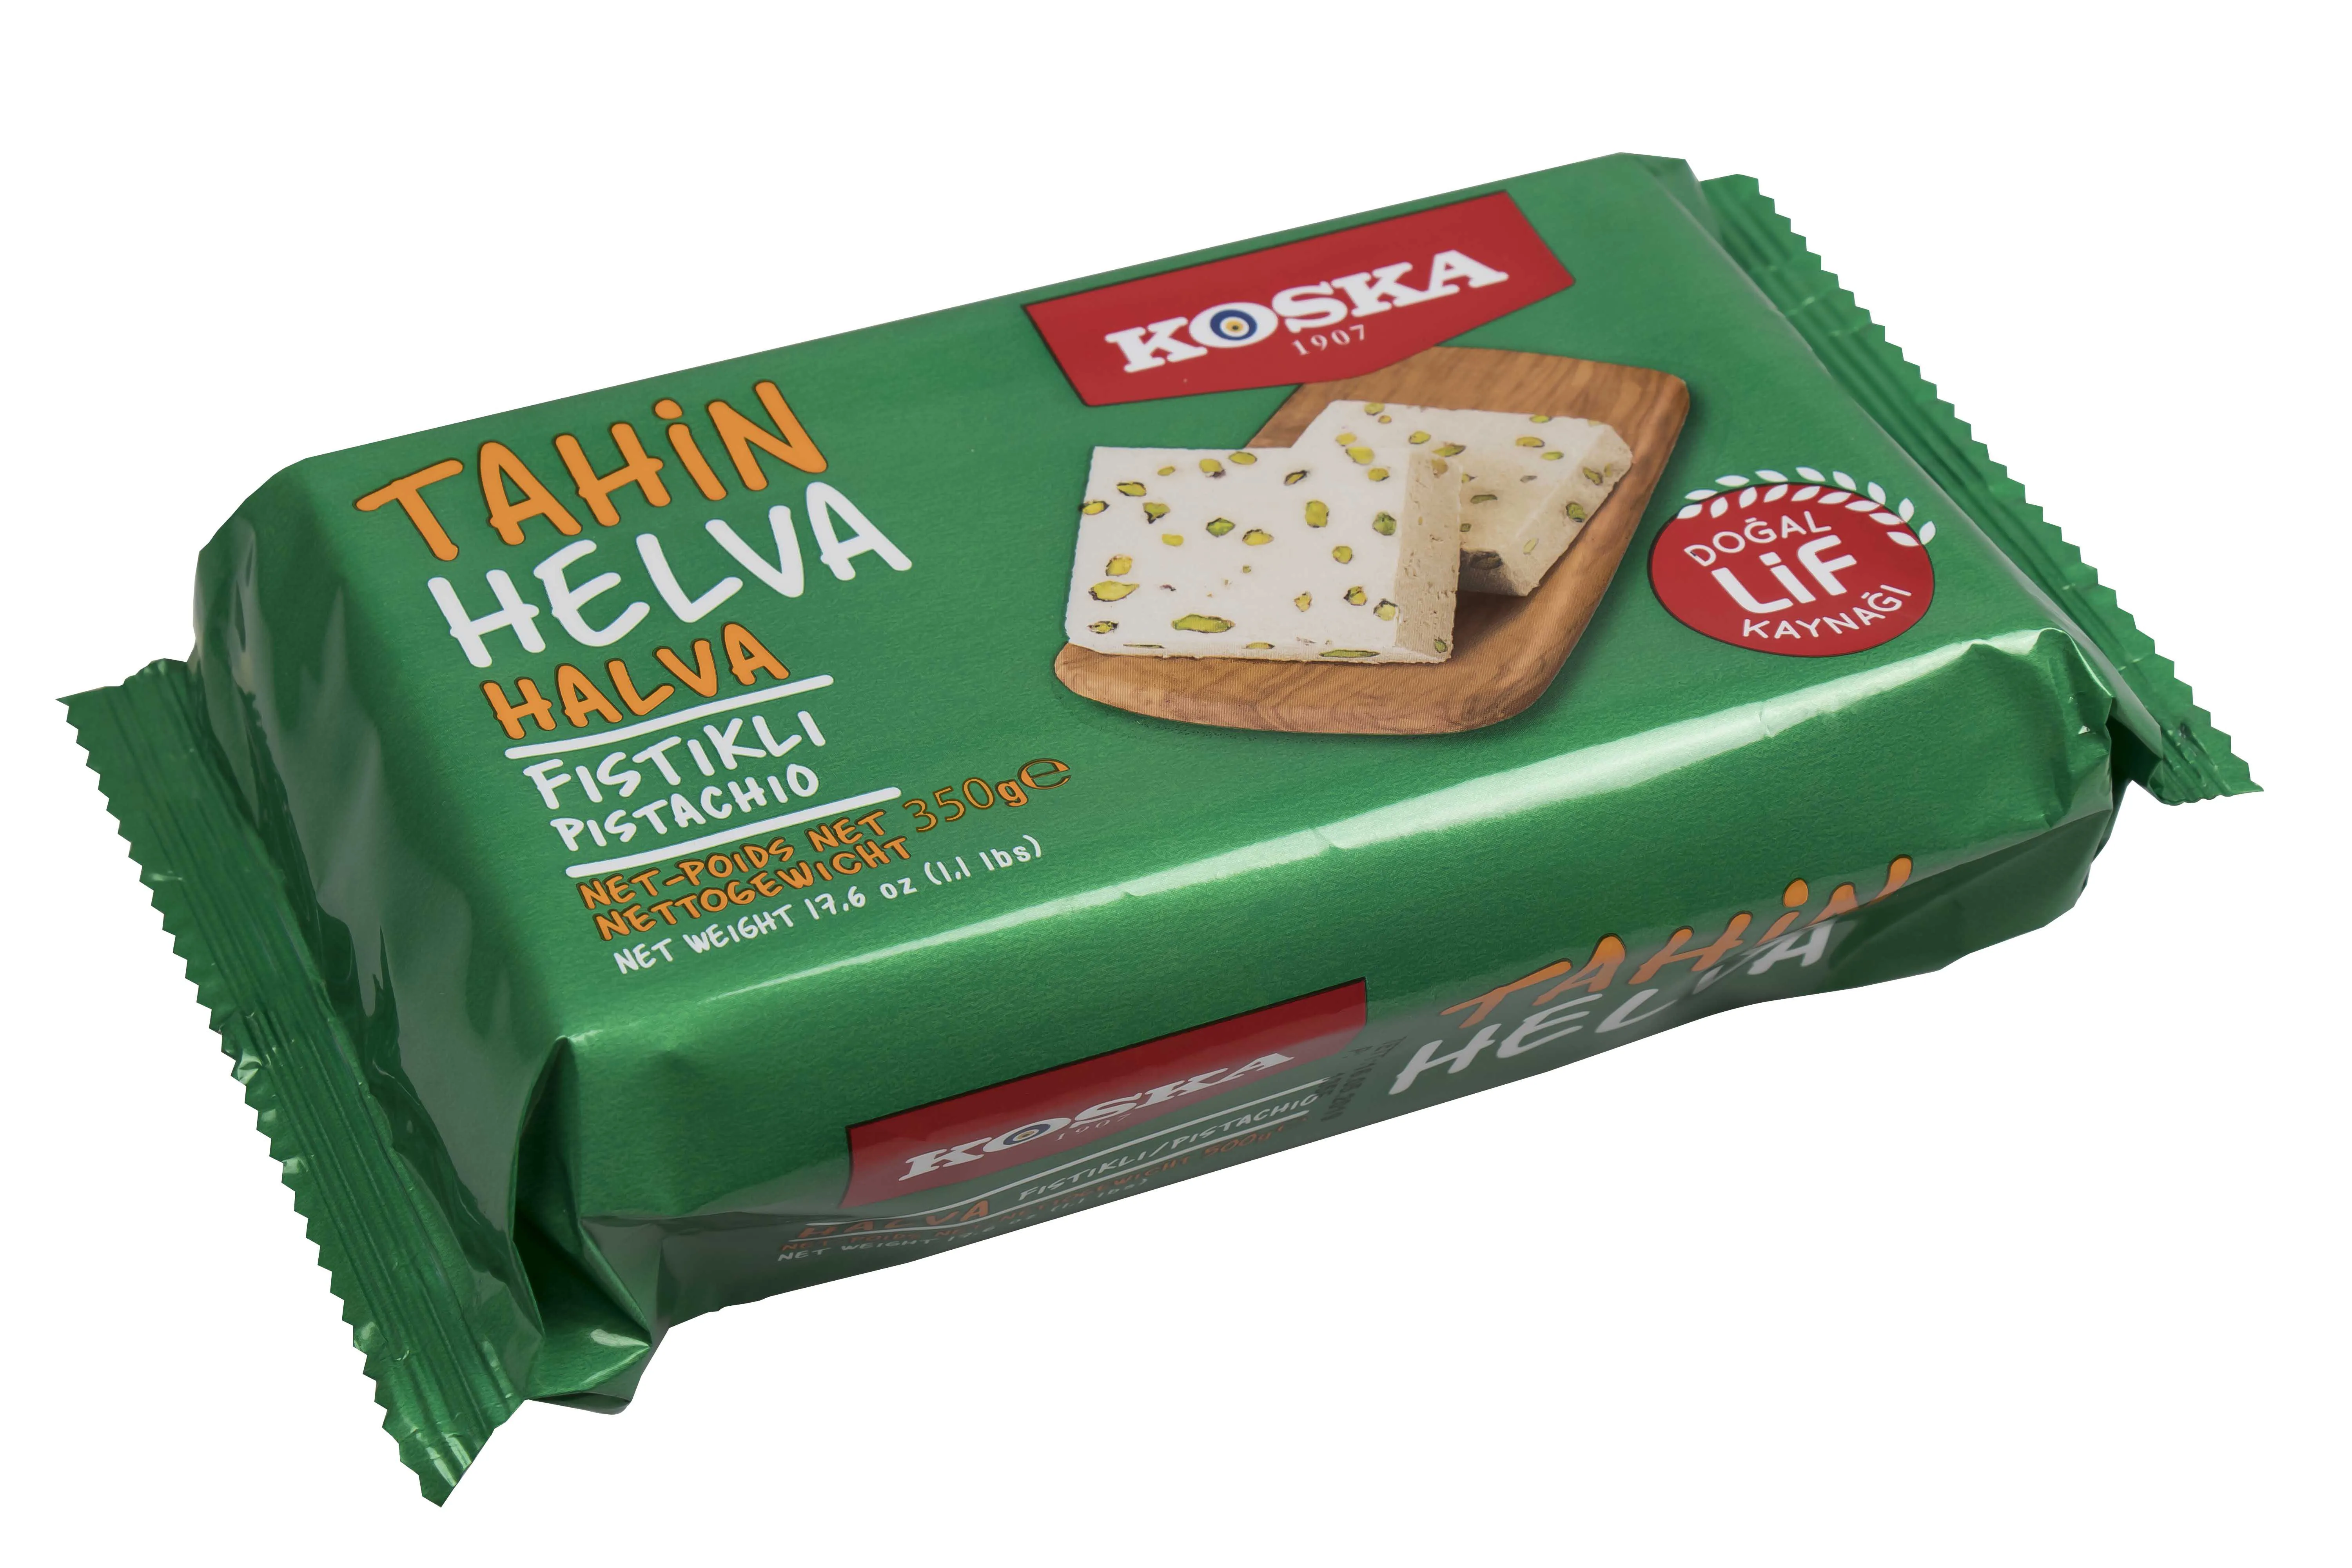 KOSKA High Quality Wholesale Product - Halva with Pistachio